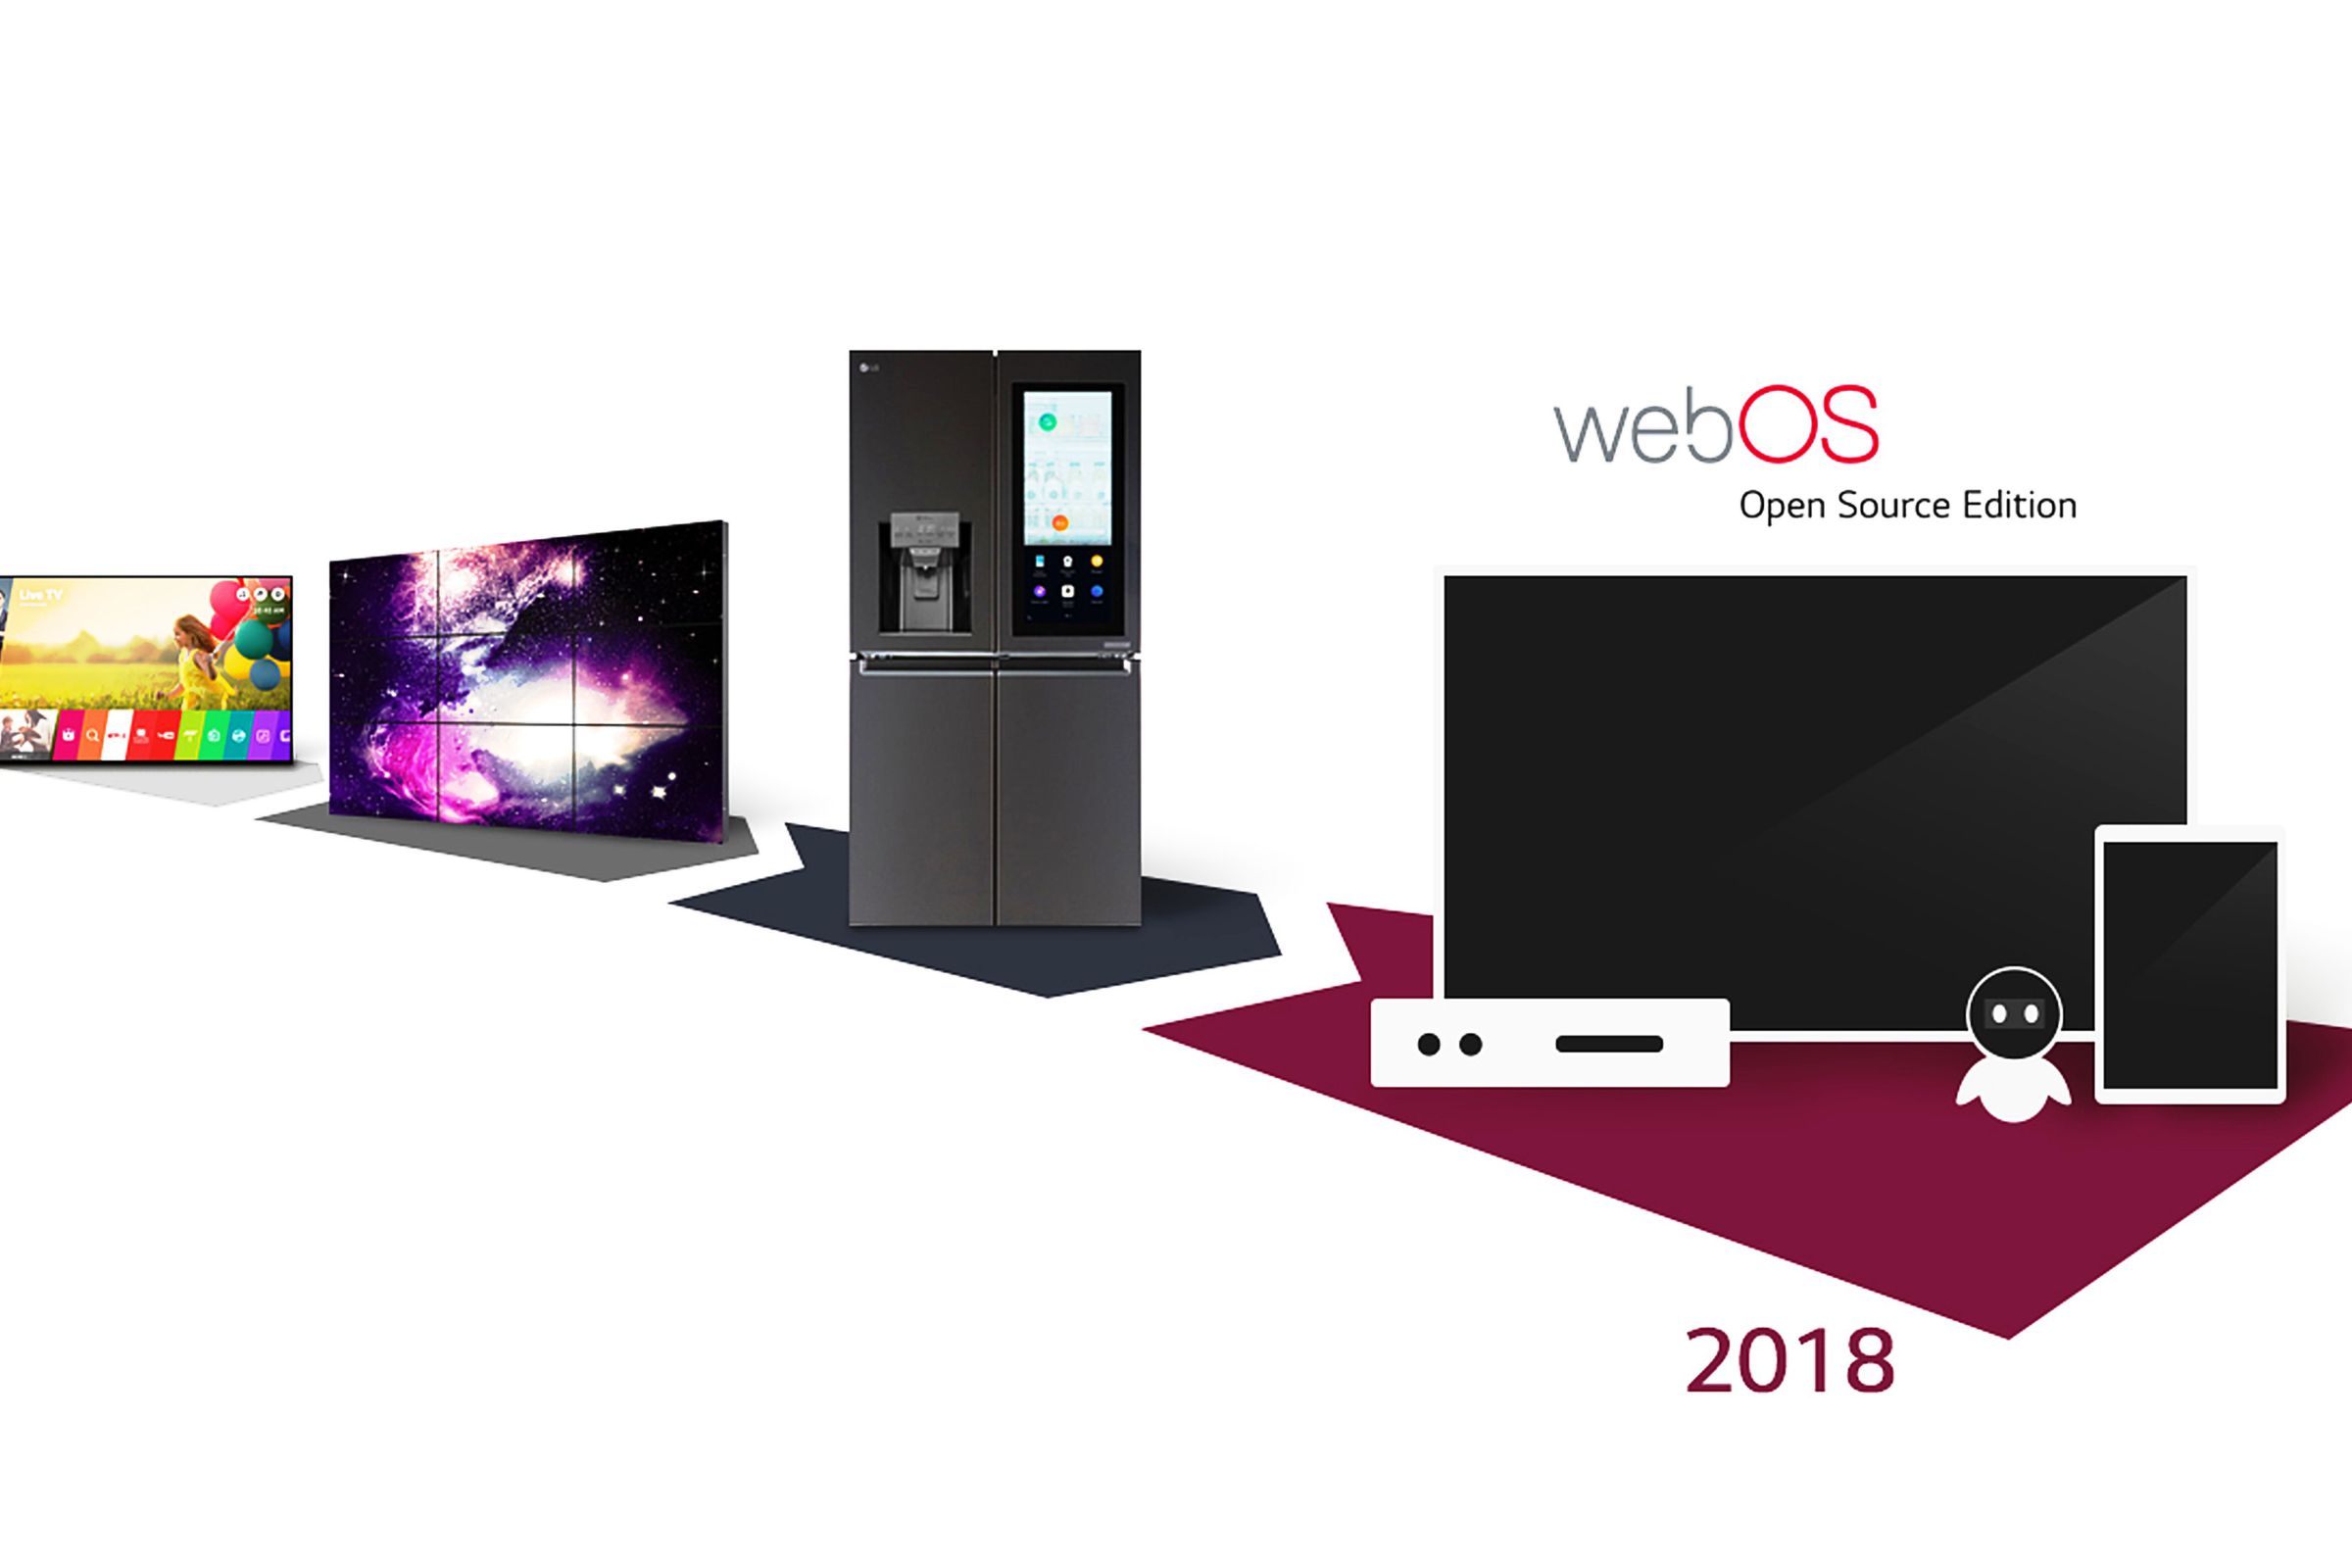 The evolution of webOS under LG